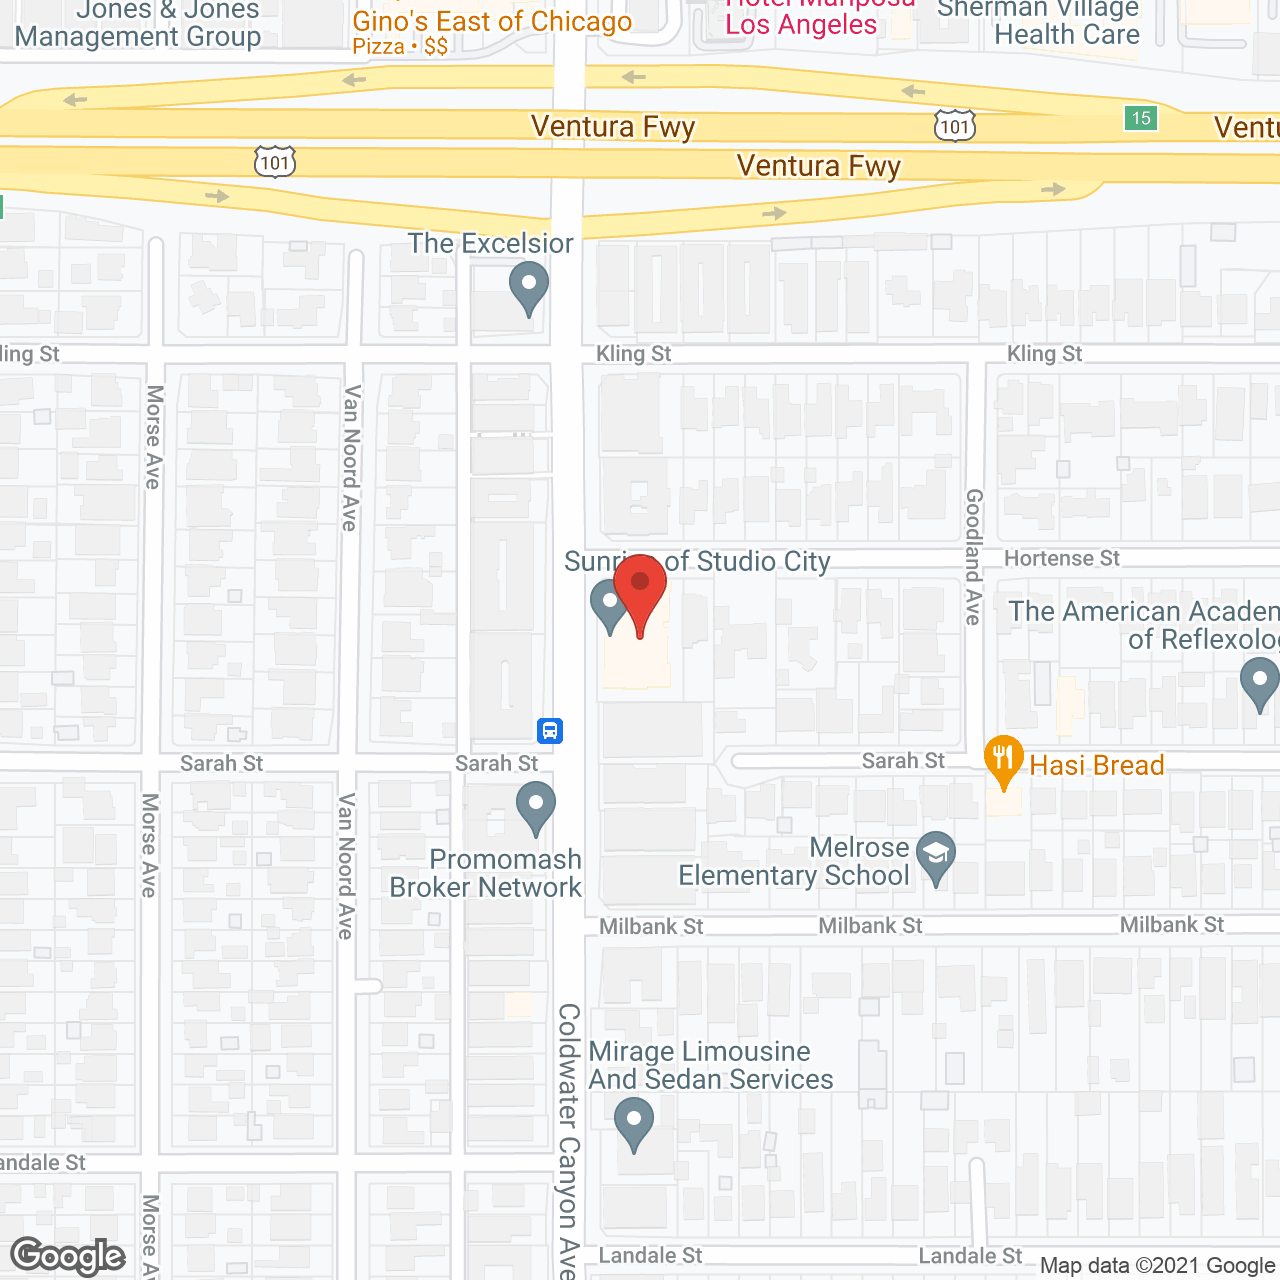 Sunrise of Studio City in google map